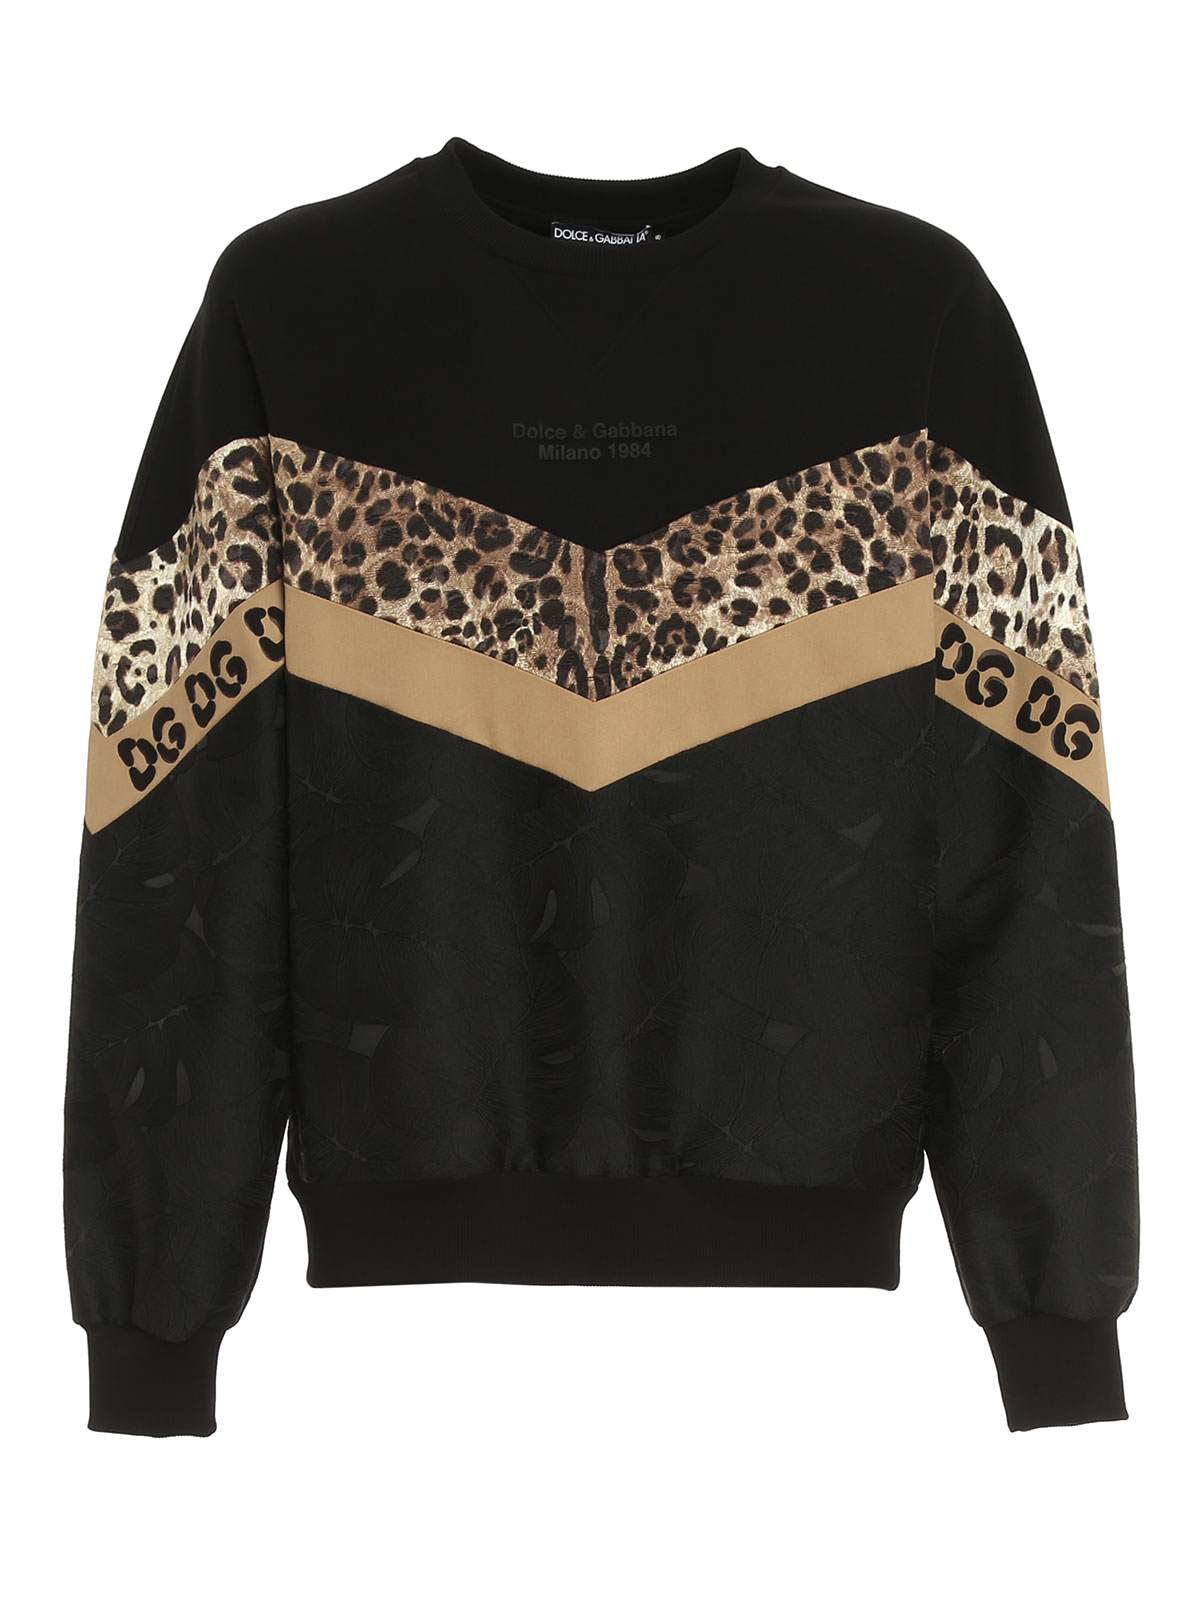 Dolce & Gabbana Brocade Jersey Sweatshirt In Black